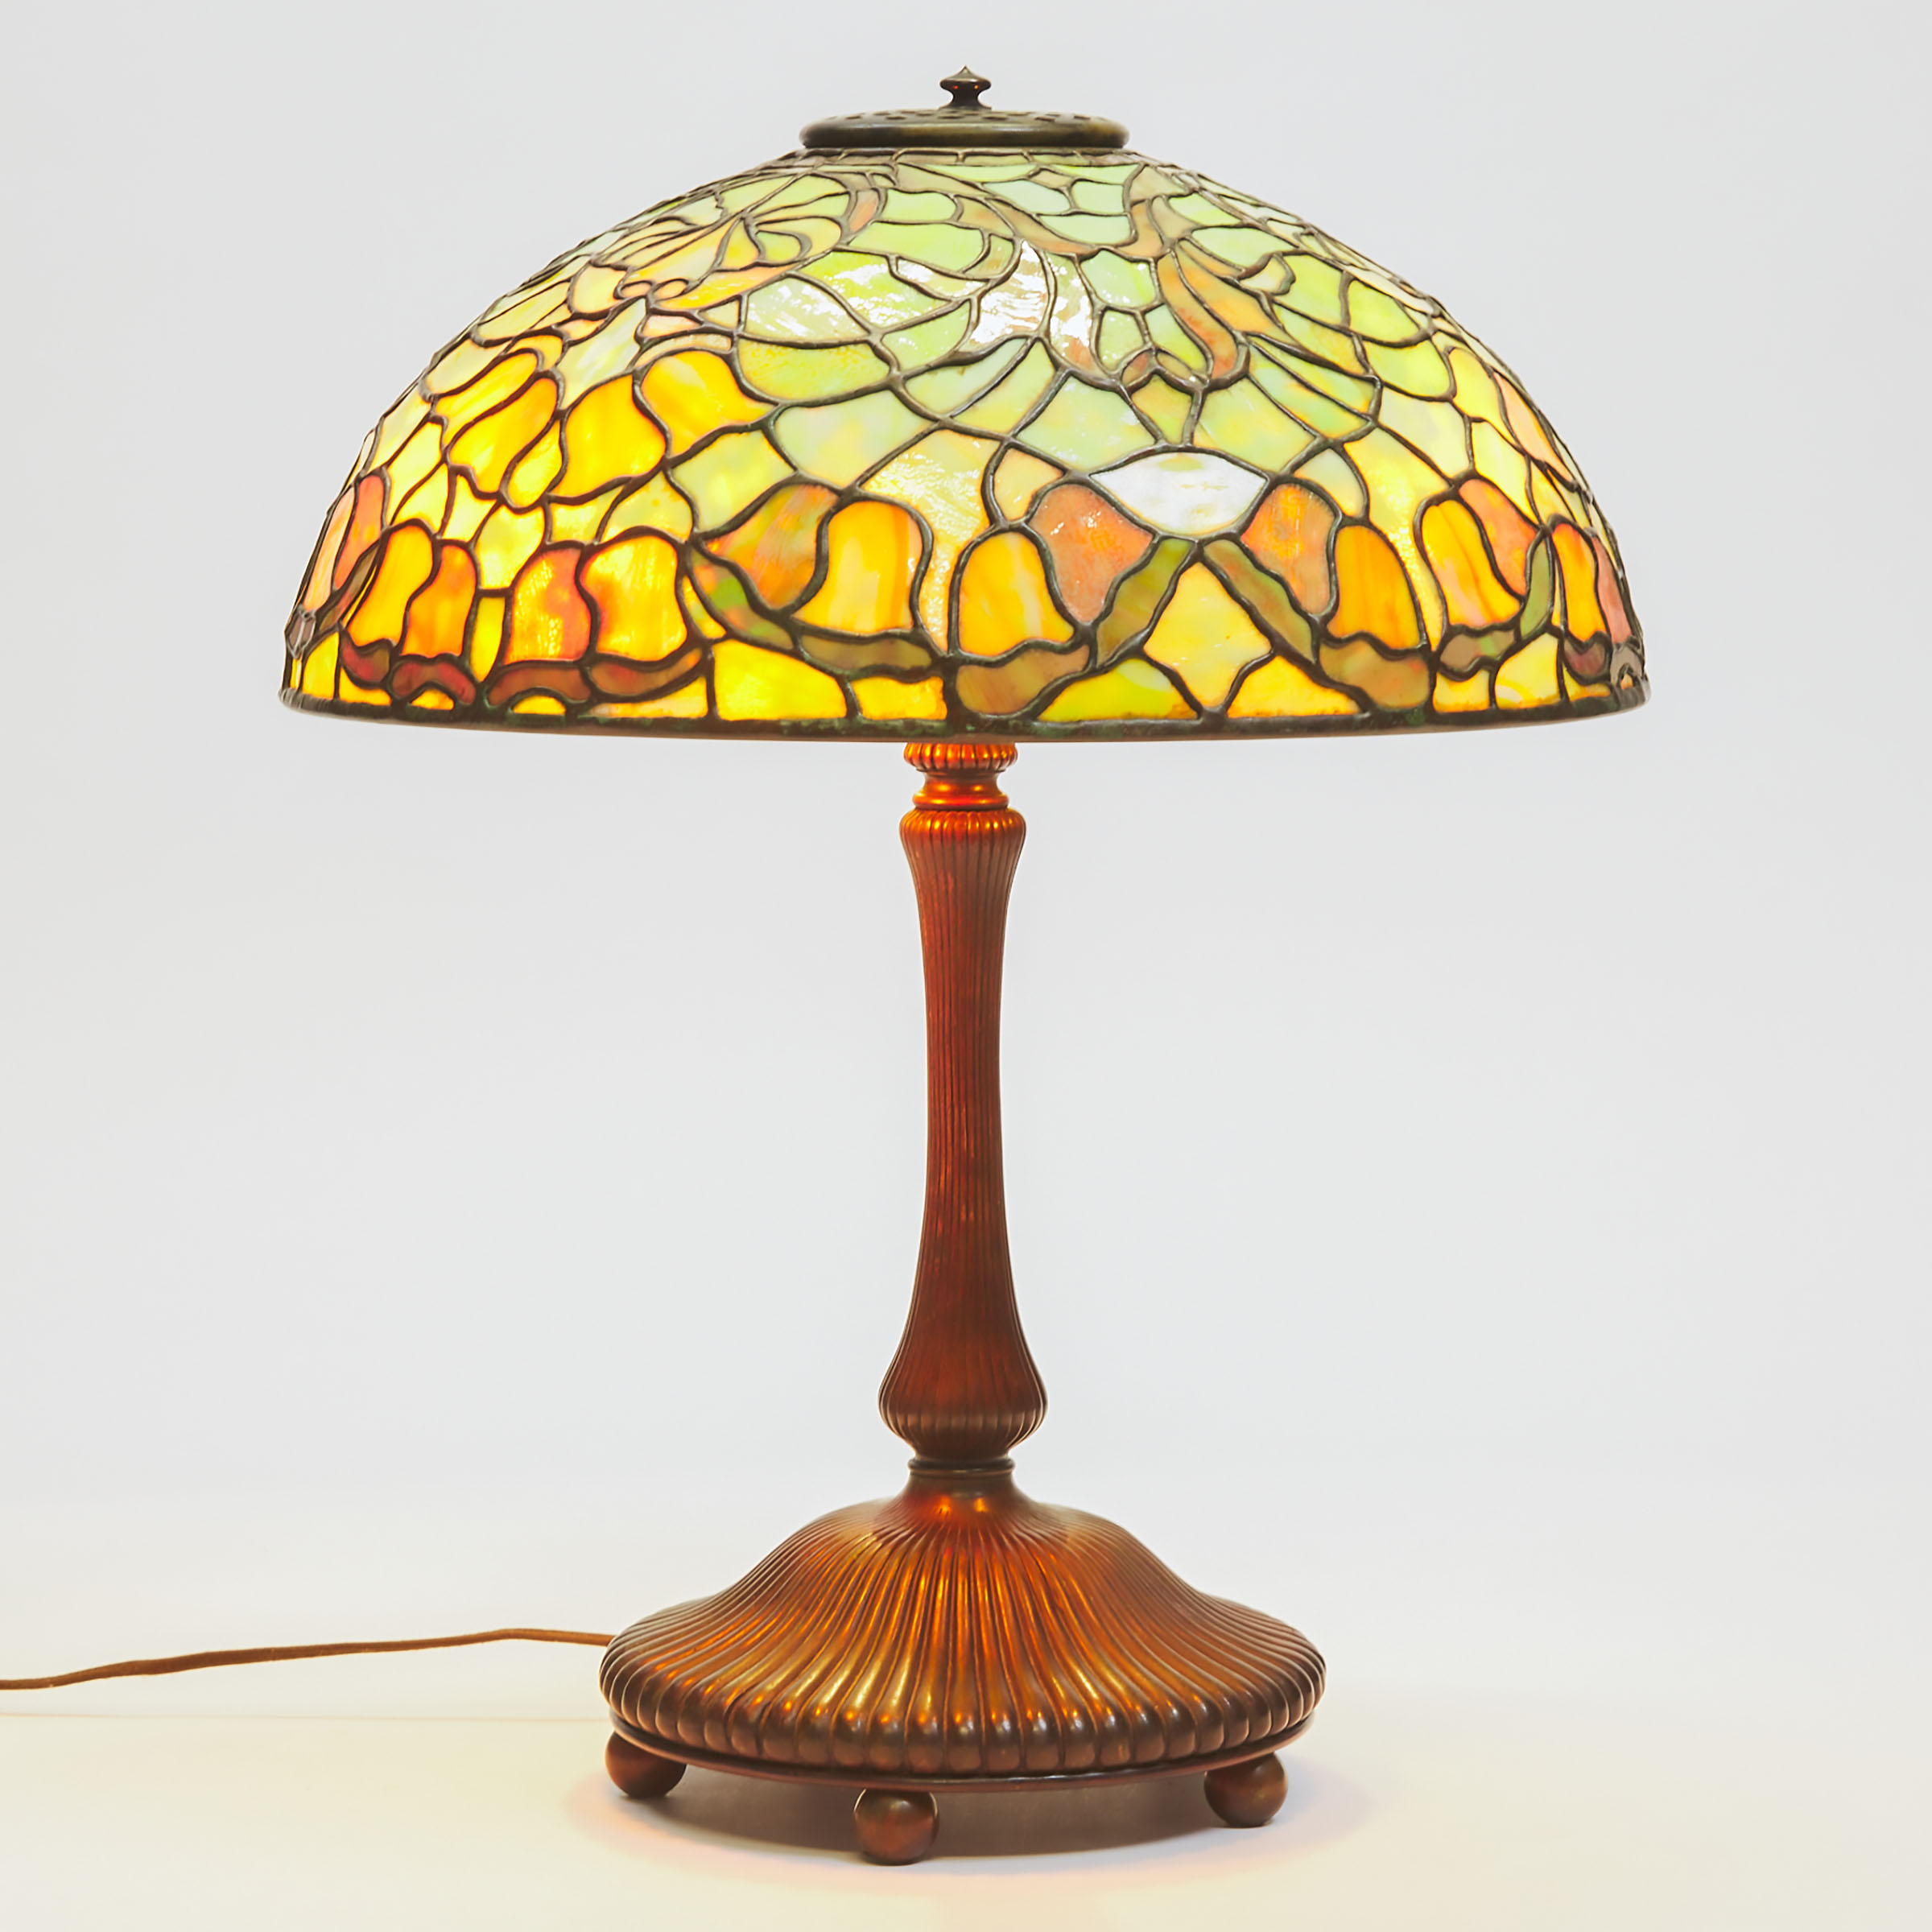 Tiffany Studios, New York, 'Bellflower' Table Lamp, early 20th century